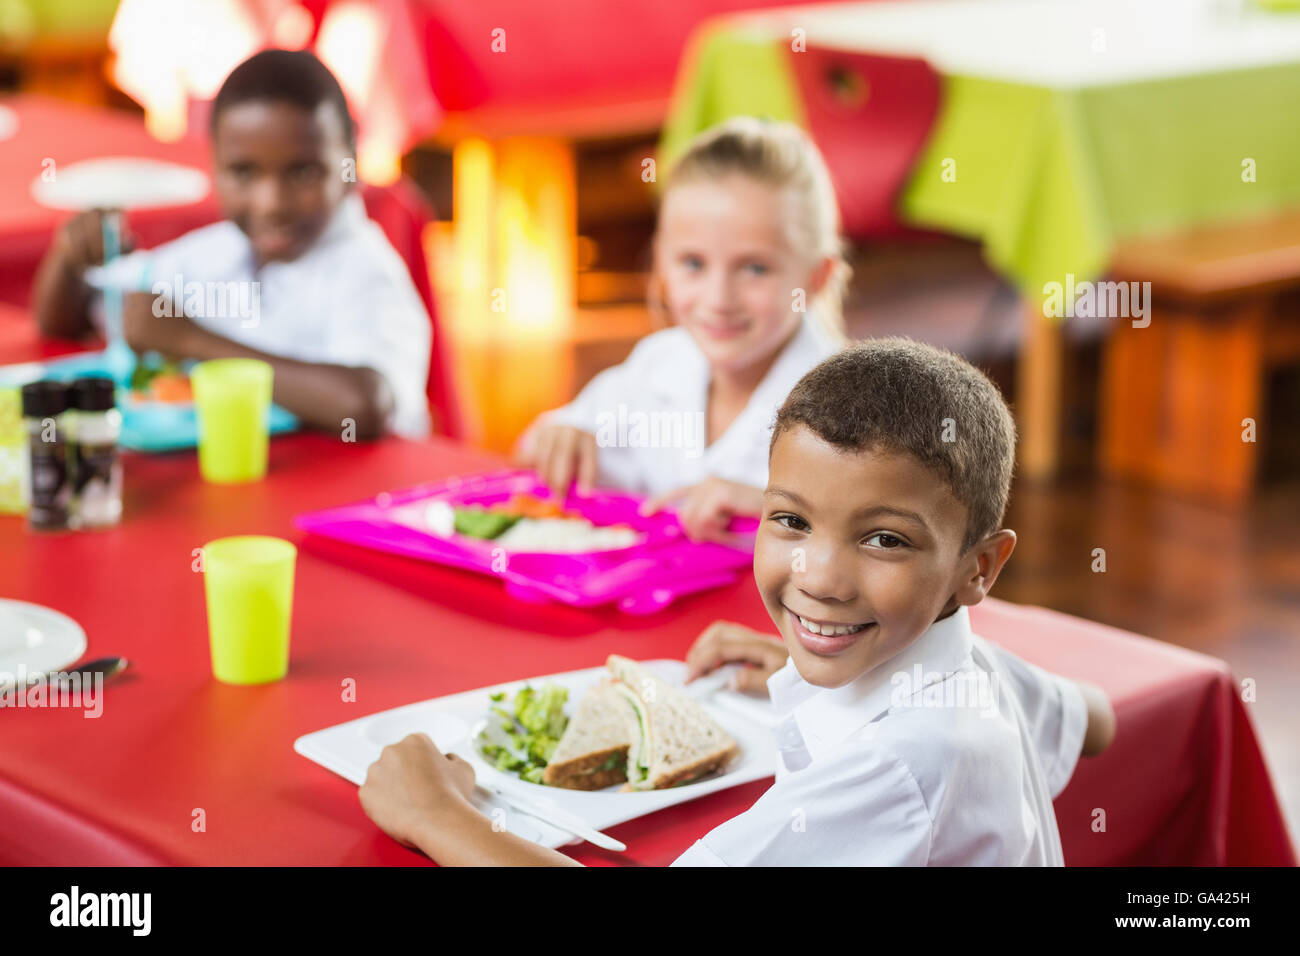 https://c8.alamy.com/comp/GA425H/children-having-lunch-during-break-time-in-school-cafeteria-GA425H.jpg